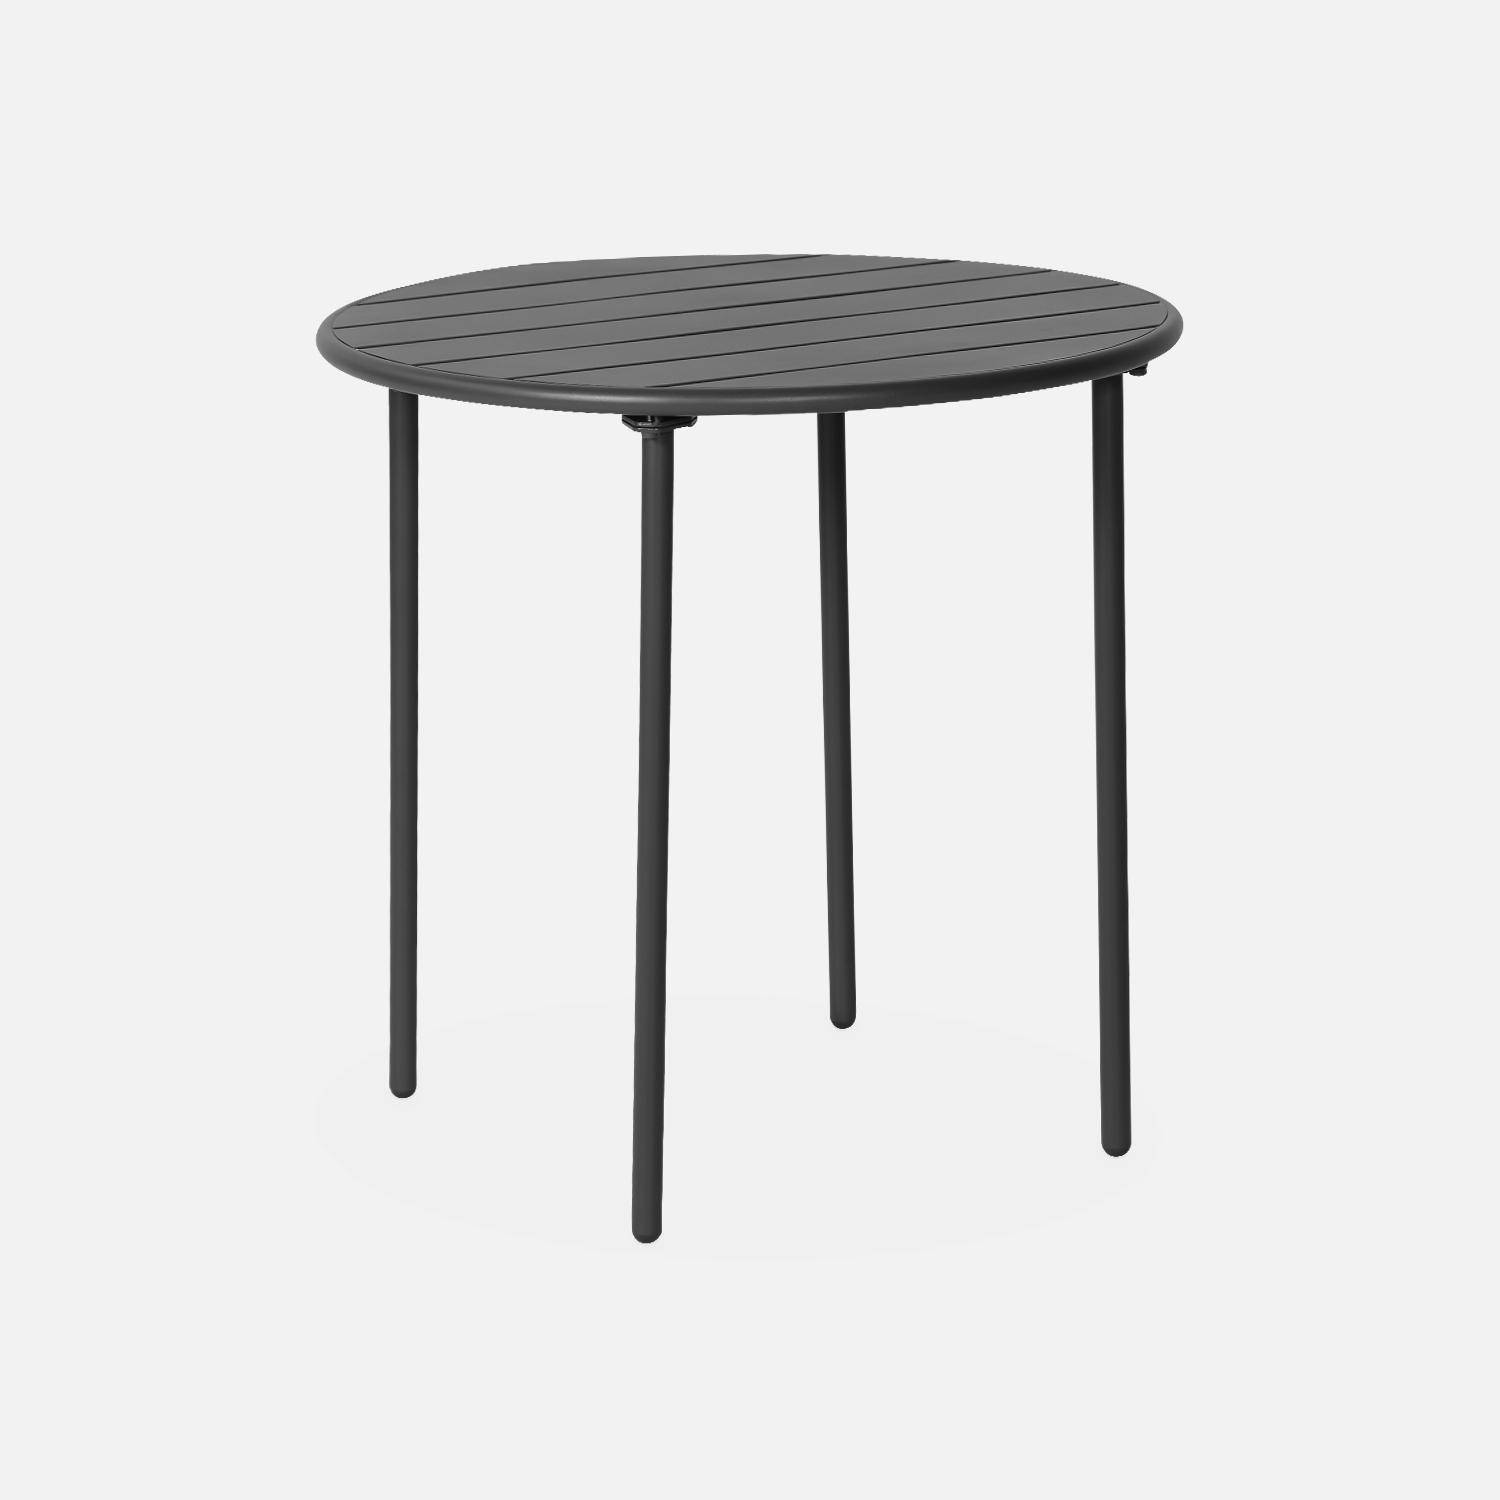 2-seater round steel garden table, Ø75cm - Amelia - Anthracite,sweeek,Photo3